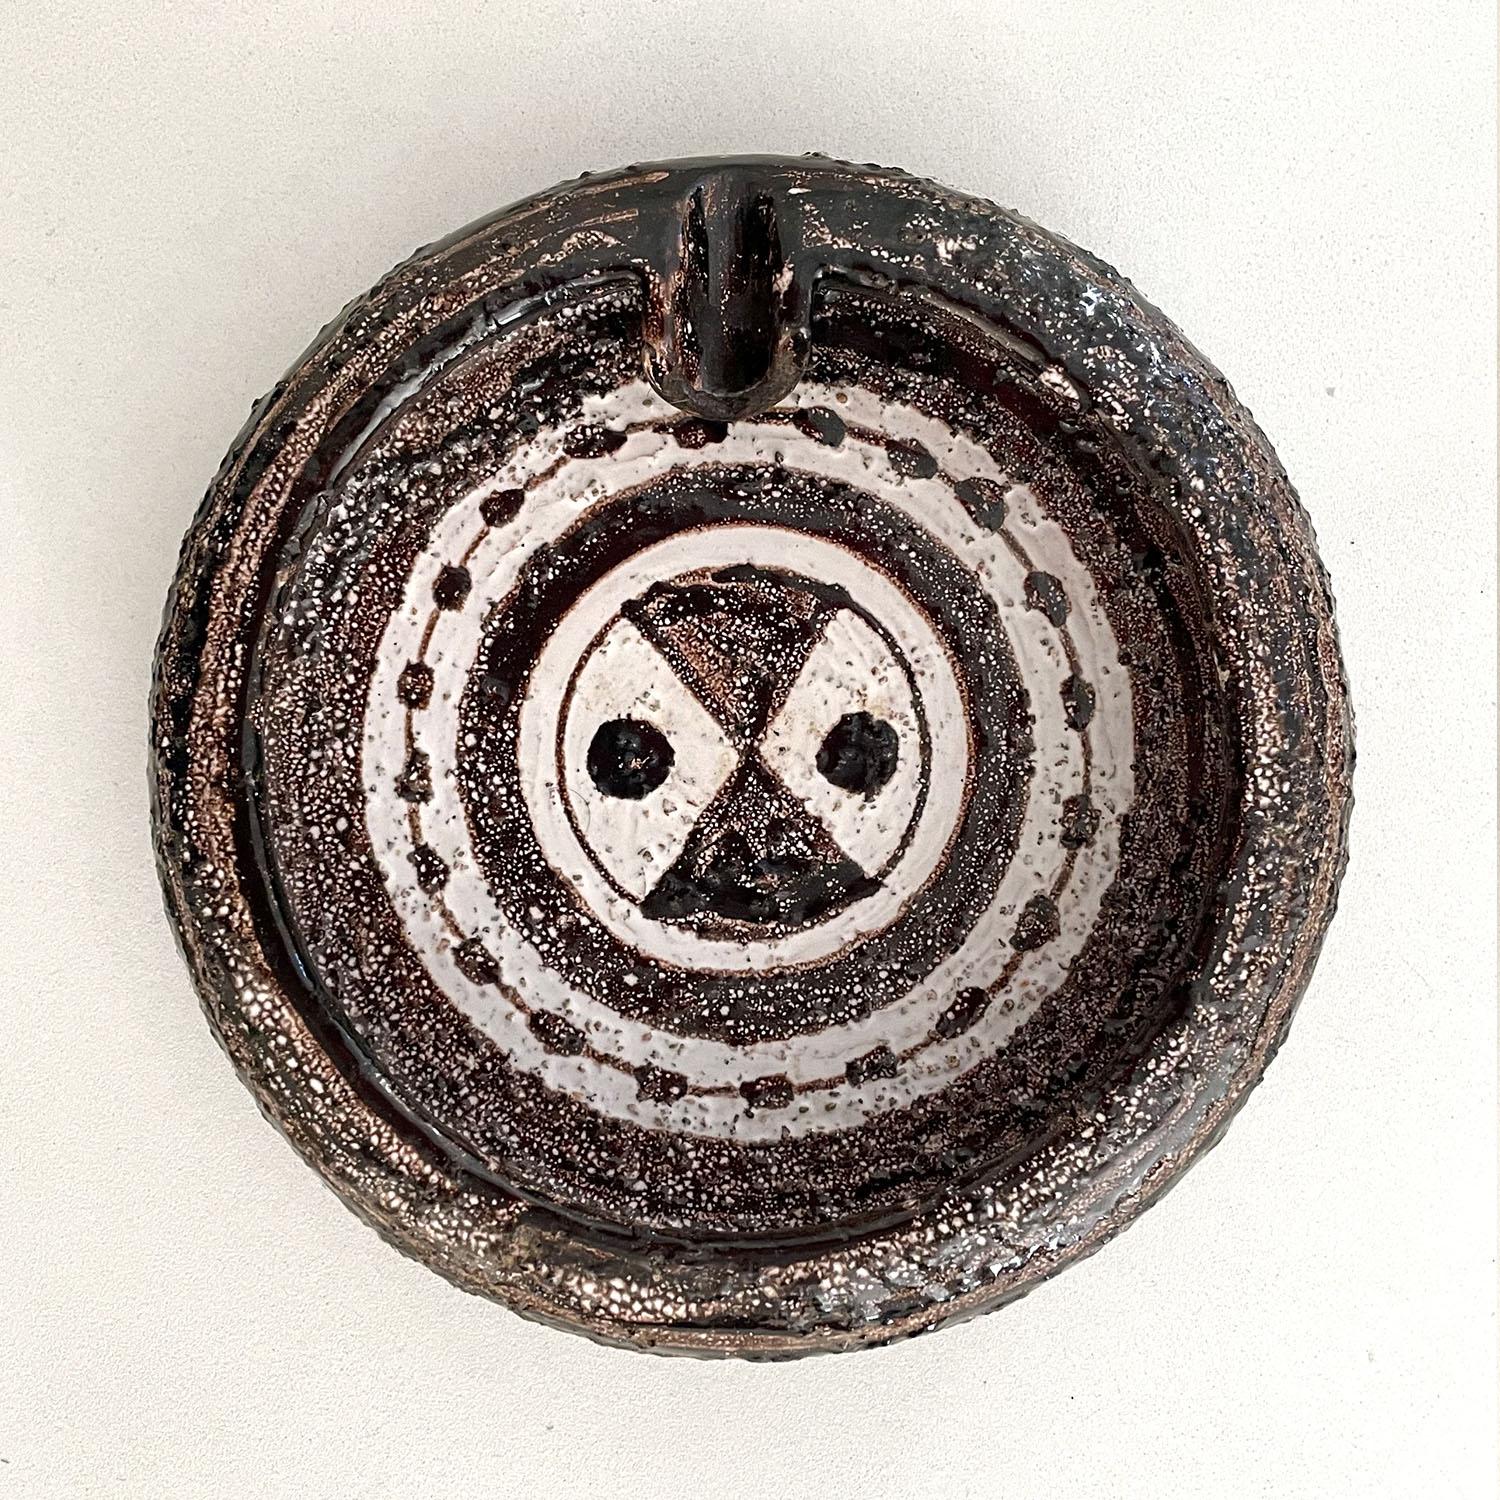 Aldo Londi Bitossi ceramic ashtray
Italy, circa 1960’s.
Manufactured by Bitossi.
Organic composition and feel.
Marked identification.